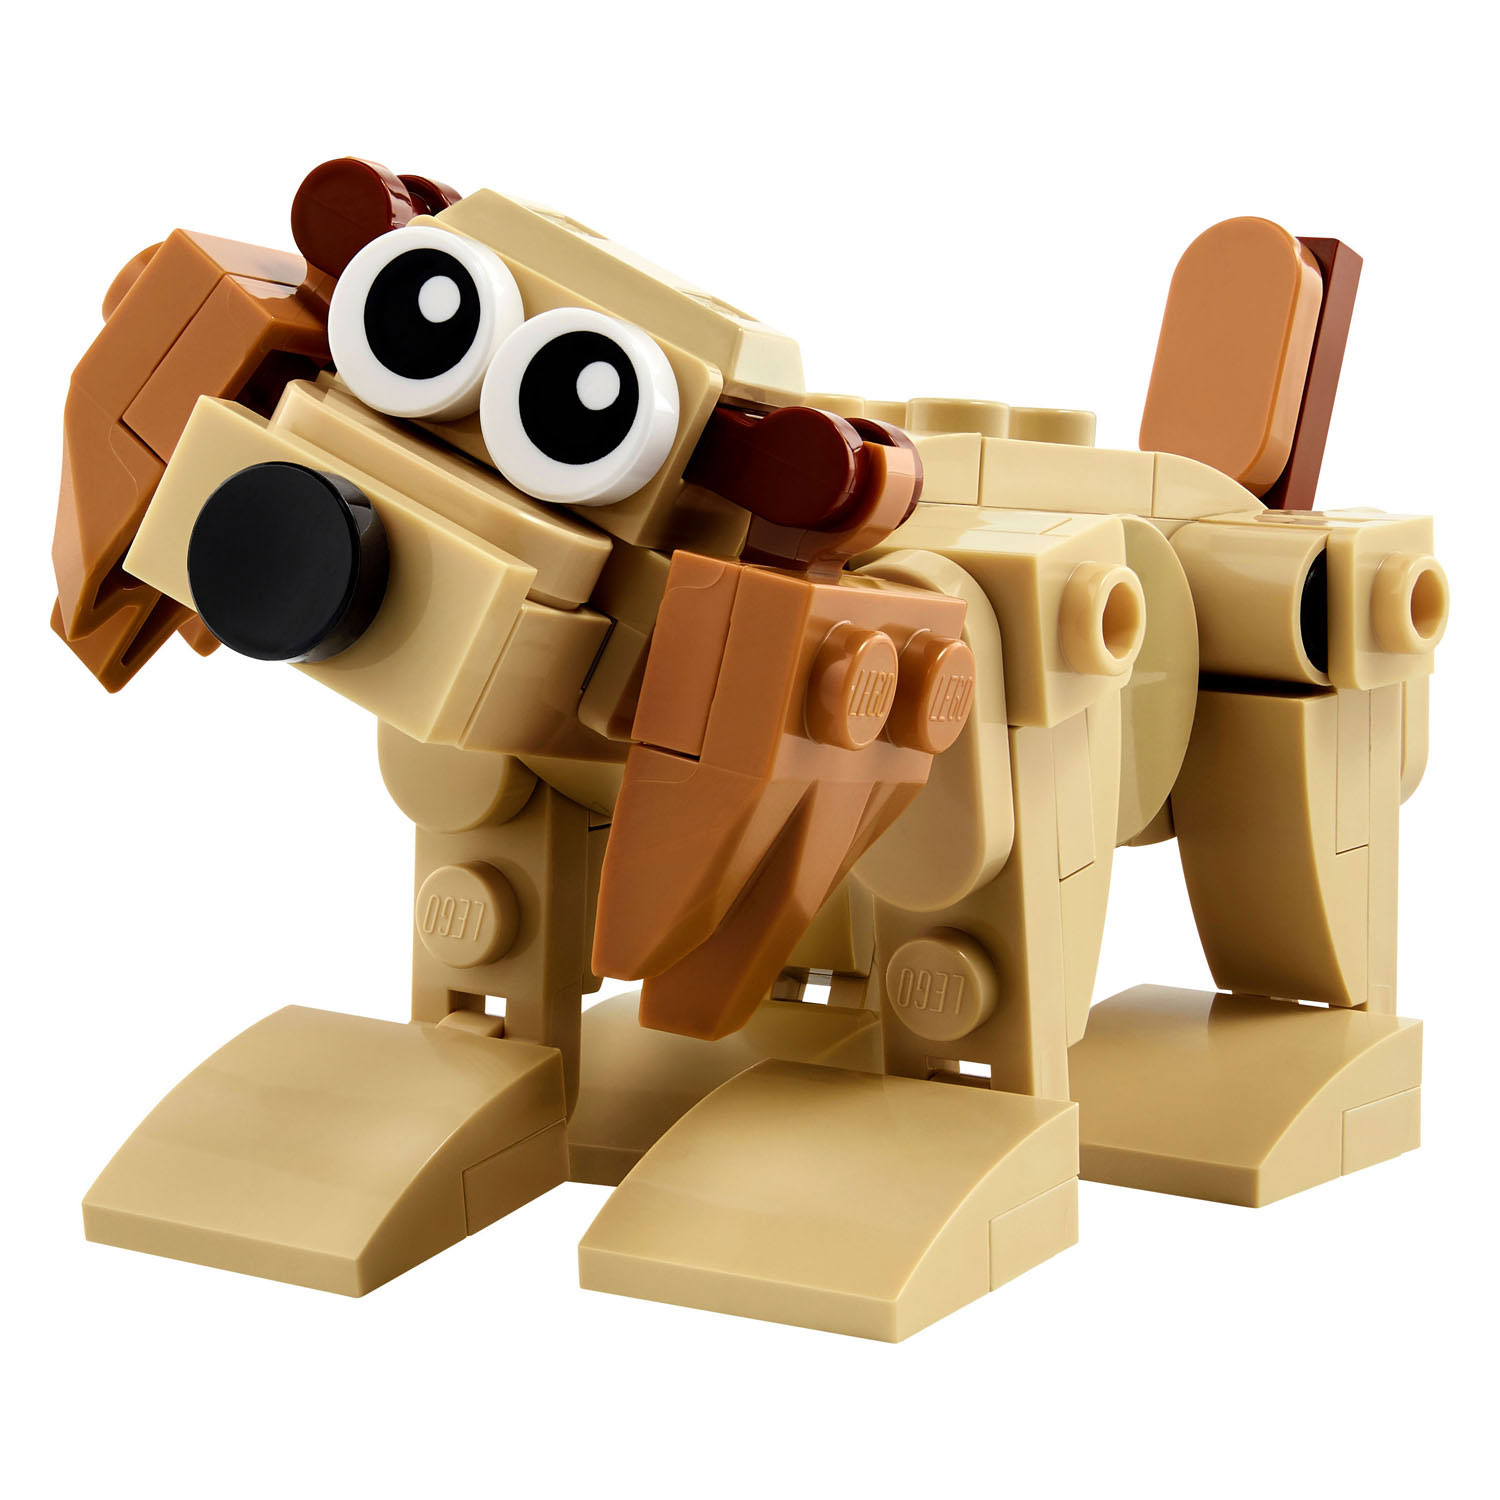 LEGO Creator 30666 Animaux cadeaux